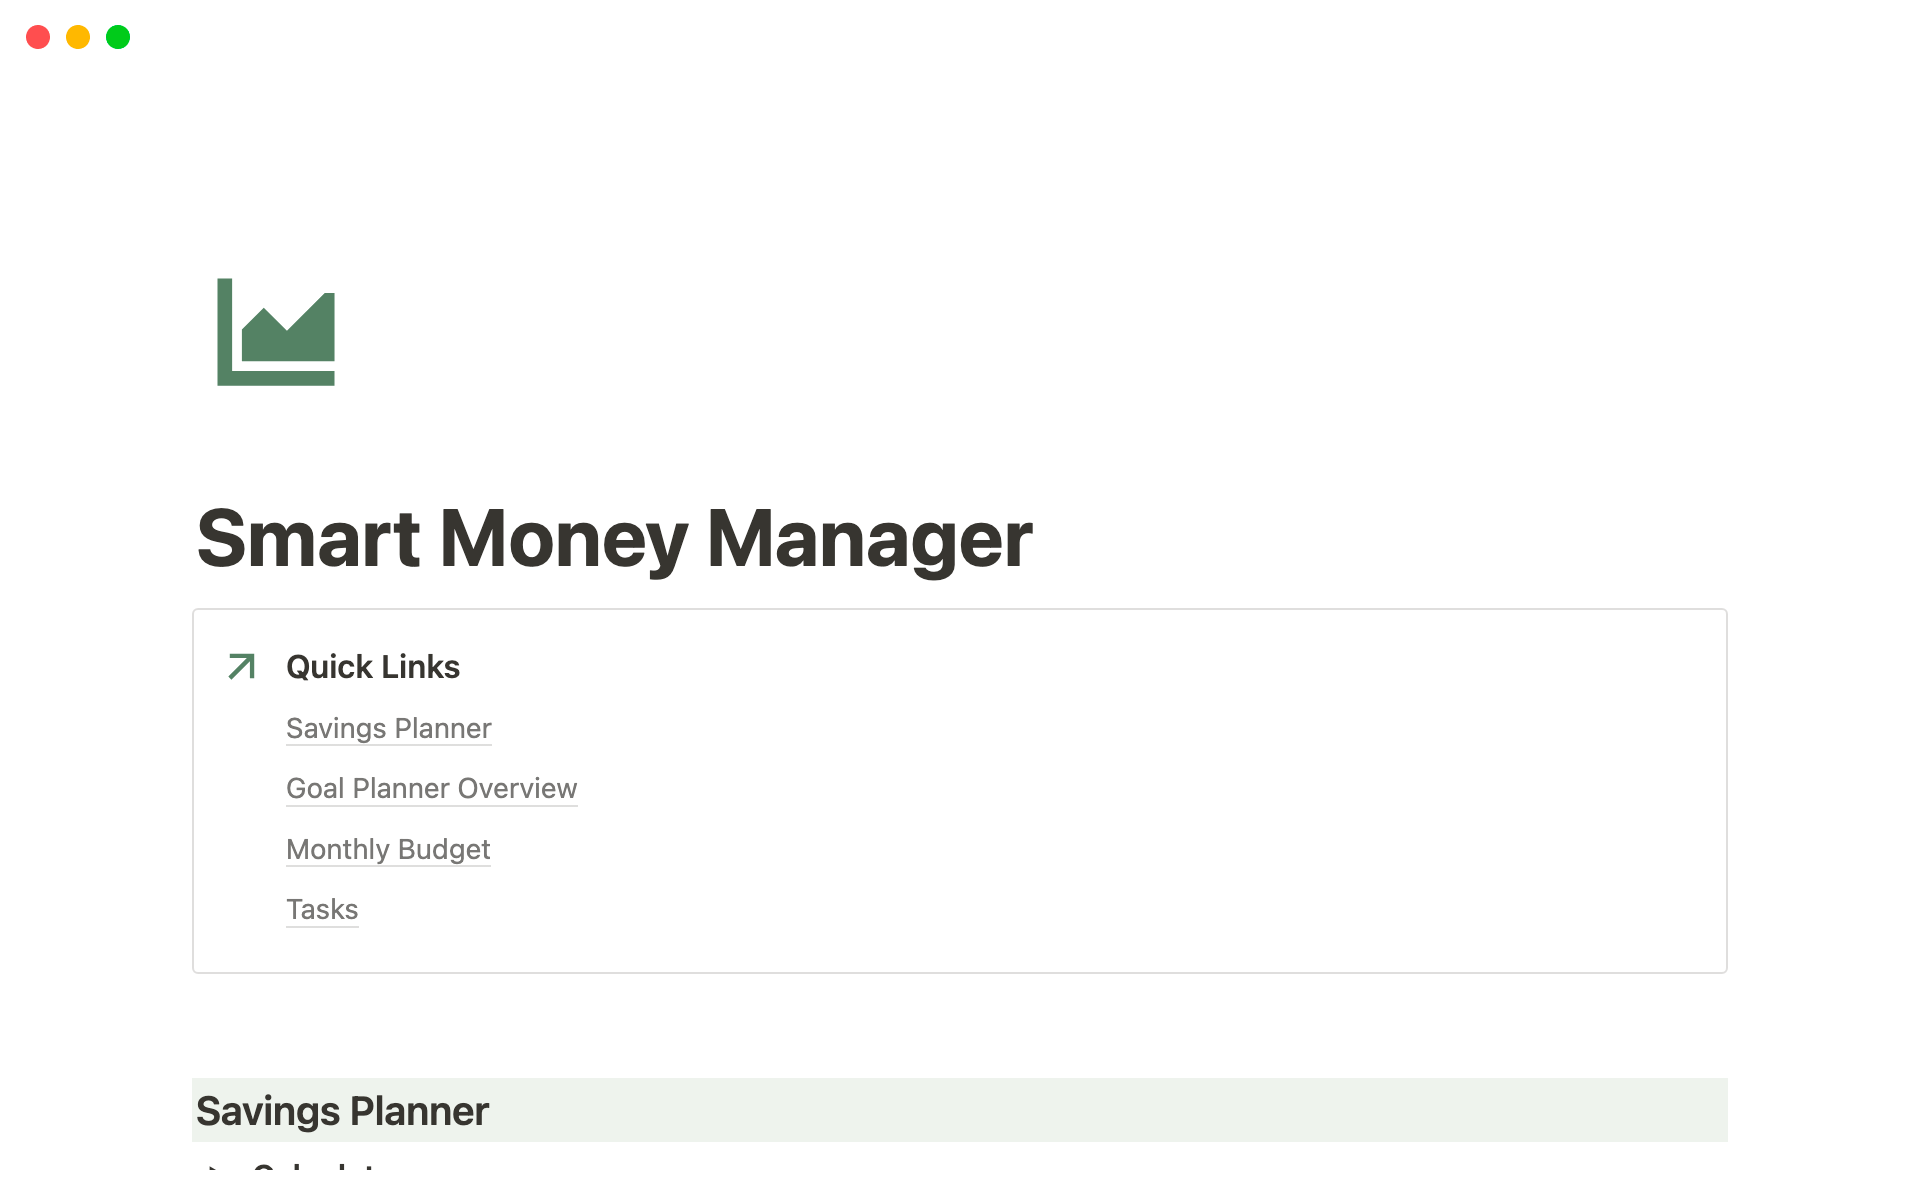 Vista previa de una plantilla para Smart Money Manager